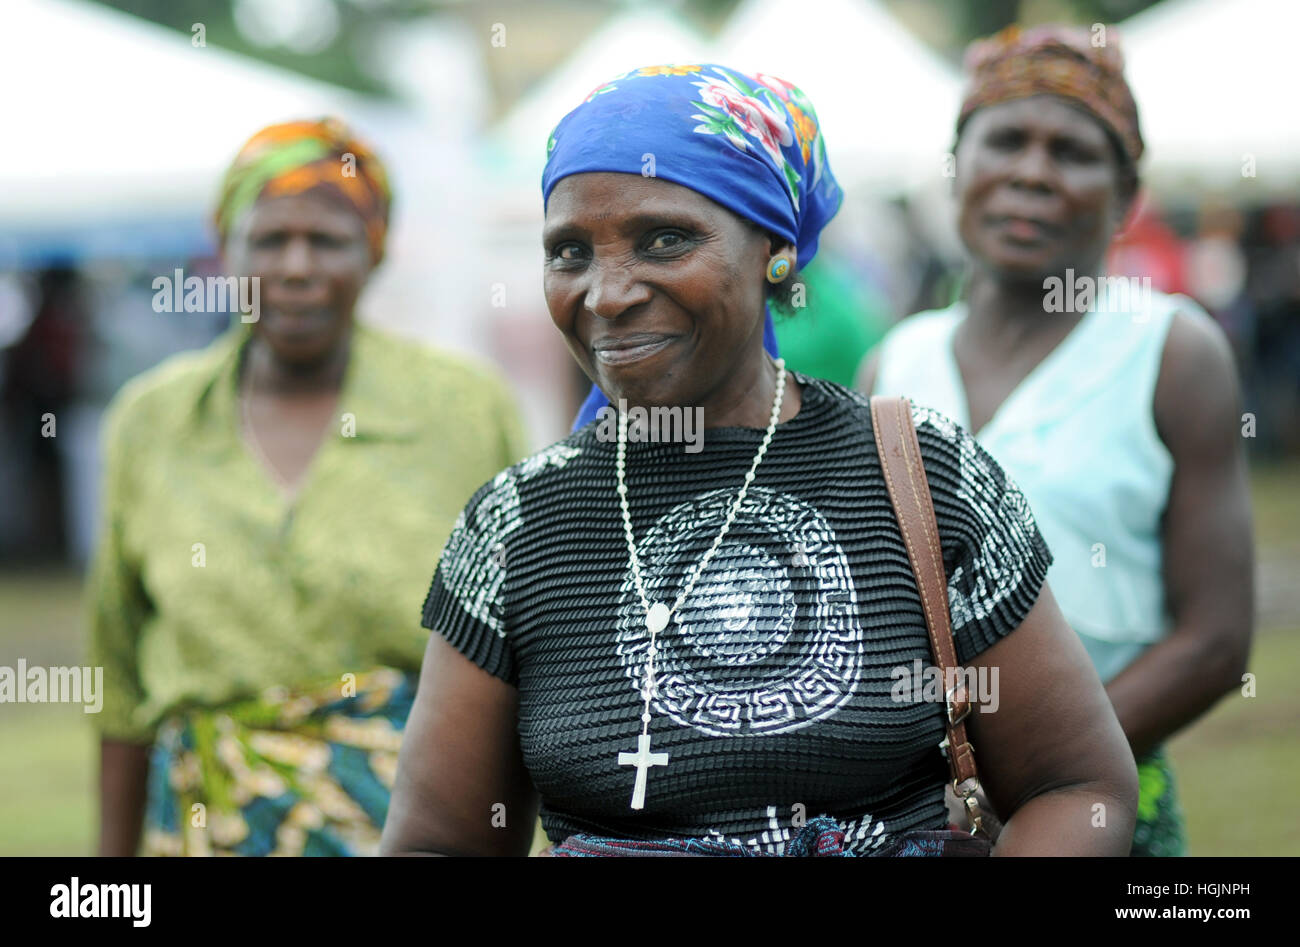 Lusaka, Zambia. 08th Mar, 2016. Women attend an event celebrating international Women's Day in Lusaka, Zambia, 08 March 2016. Photo: Britta Pedersen/dpa-Zentralbild/ZB/dpa/Alamy Live News Stock Photo